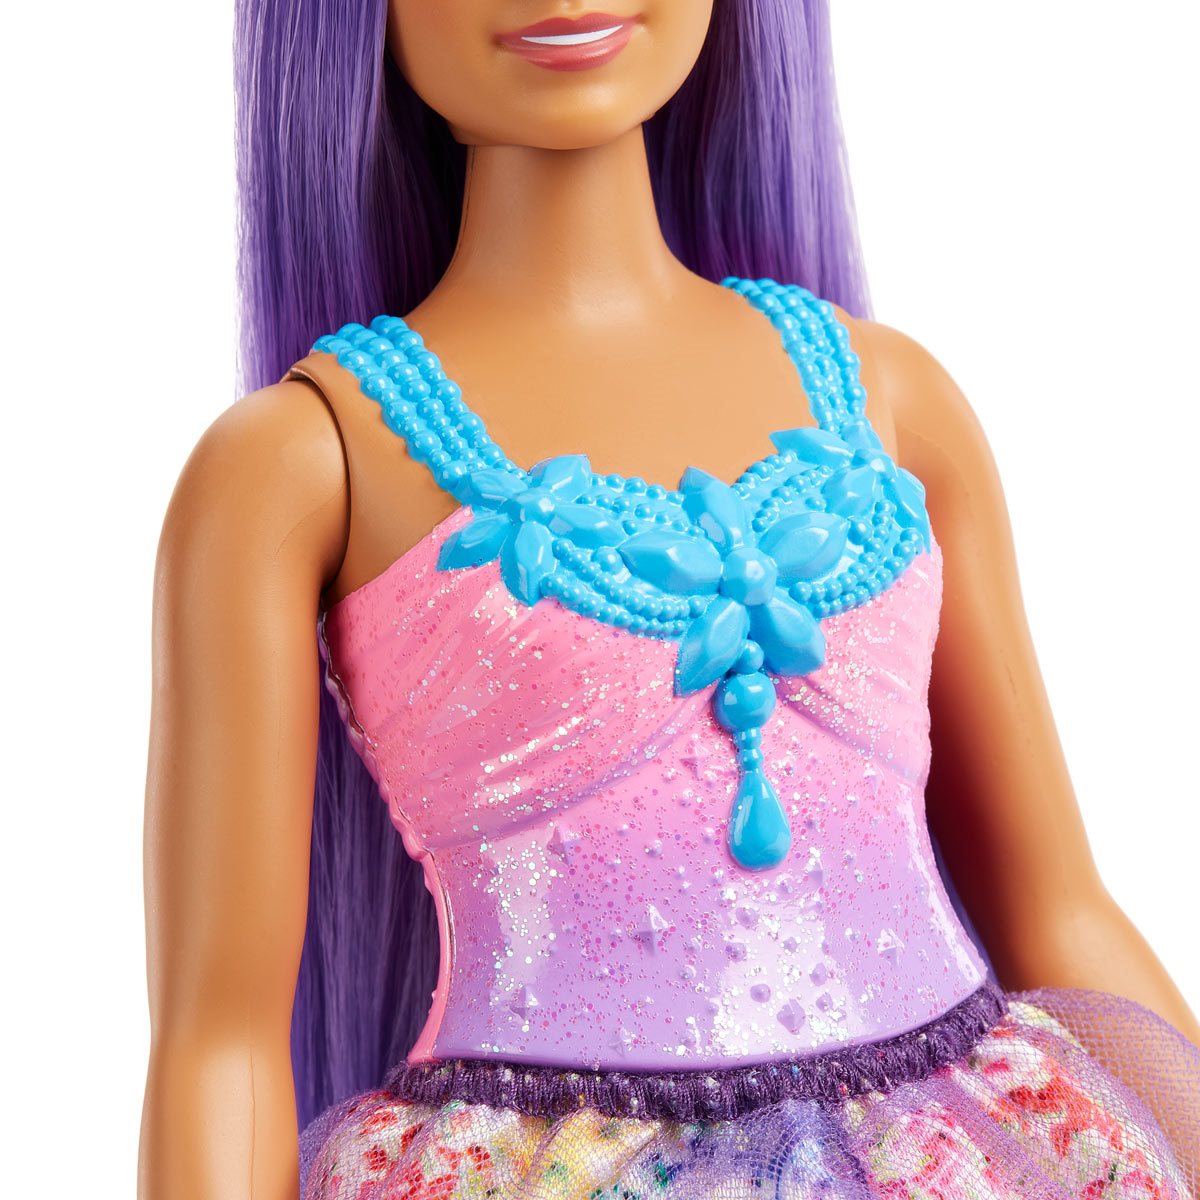 Barbie Princess Doll with Hair